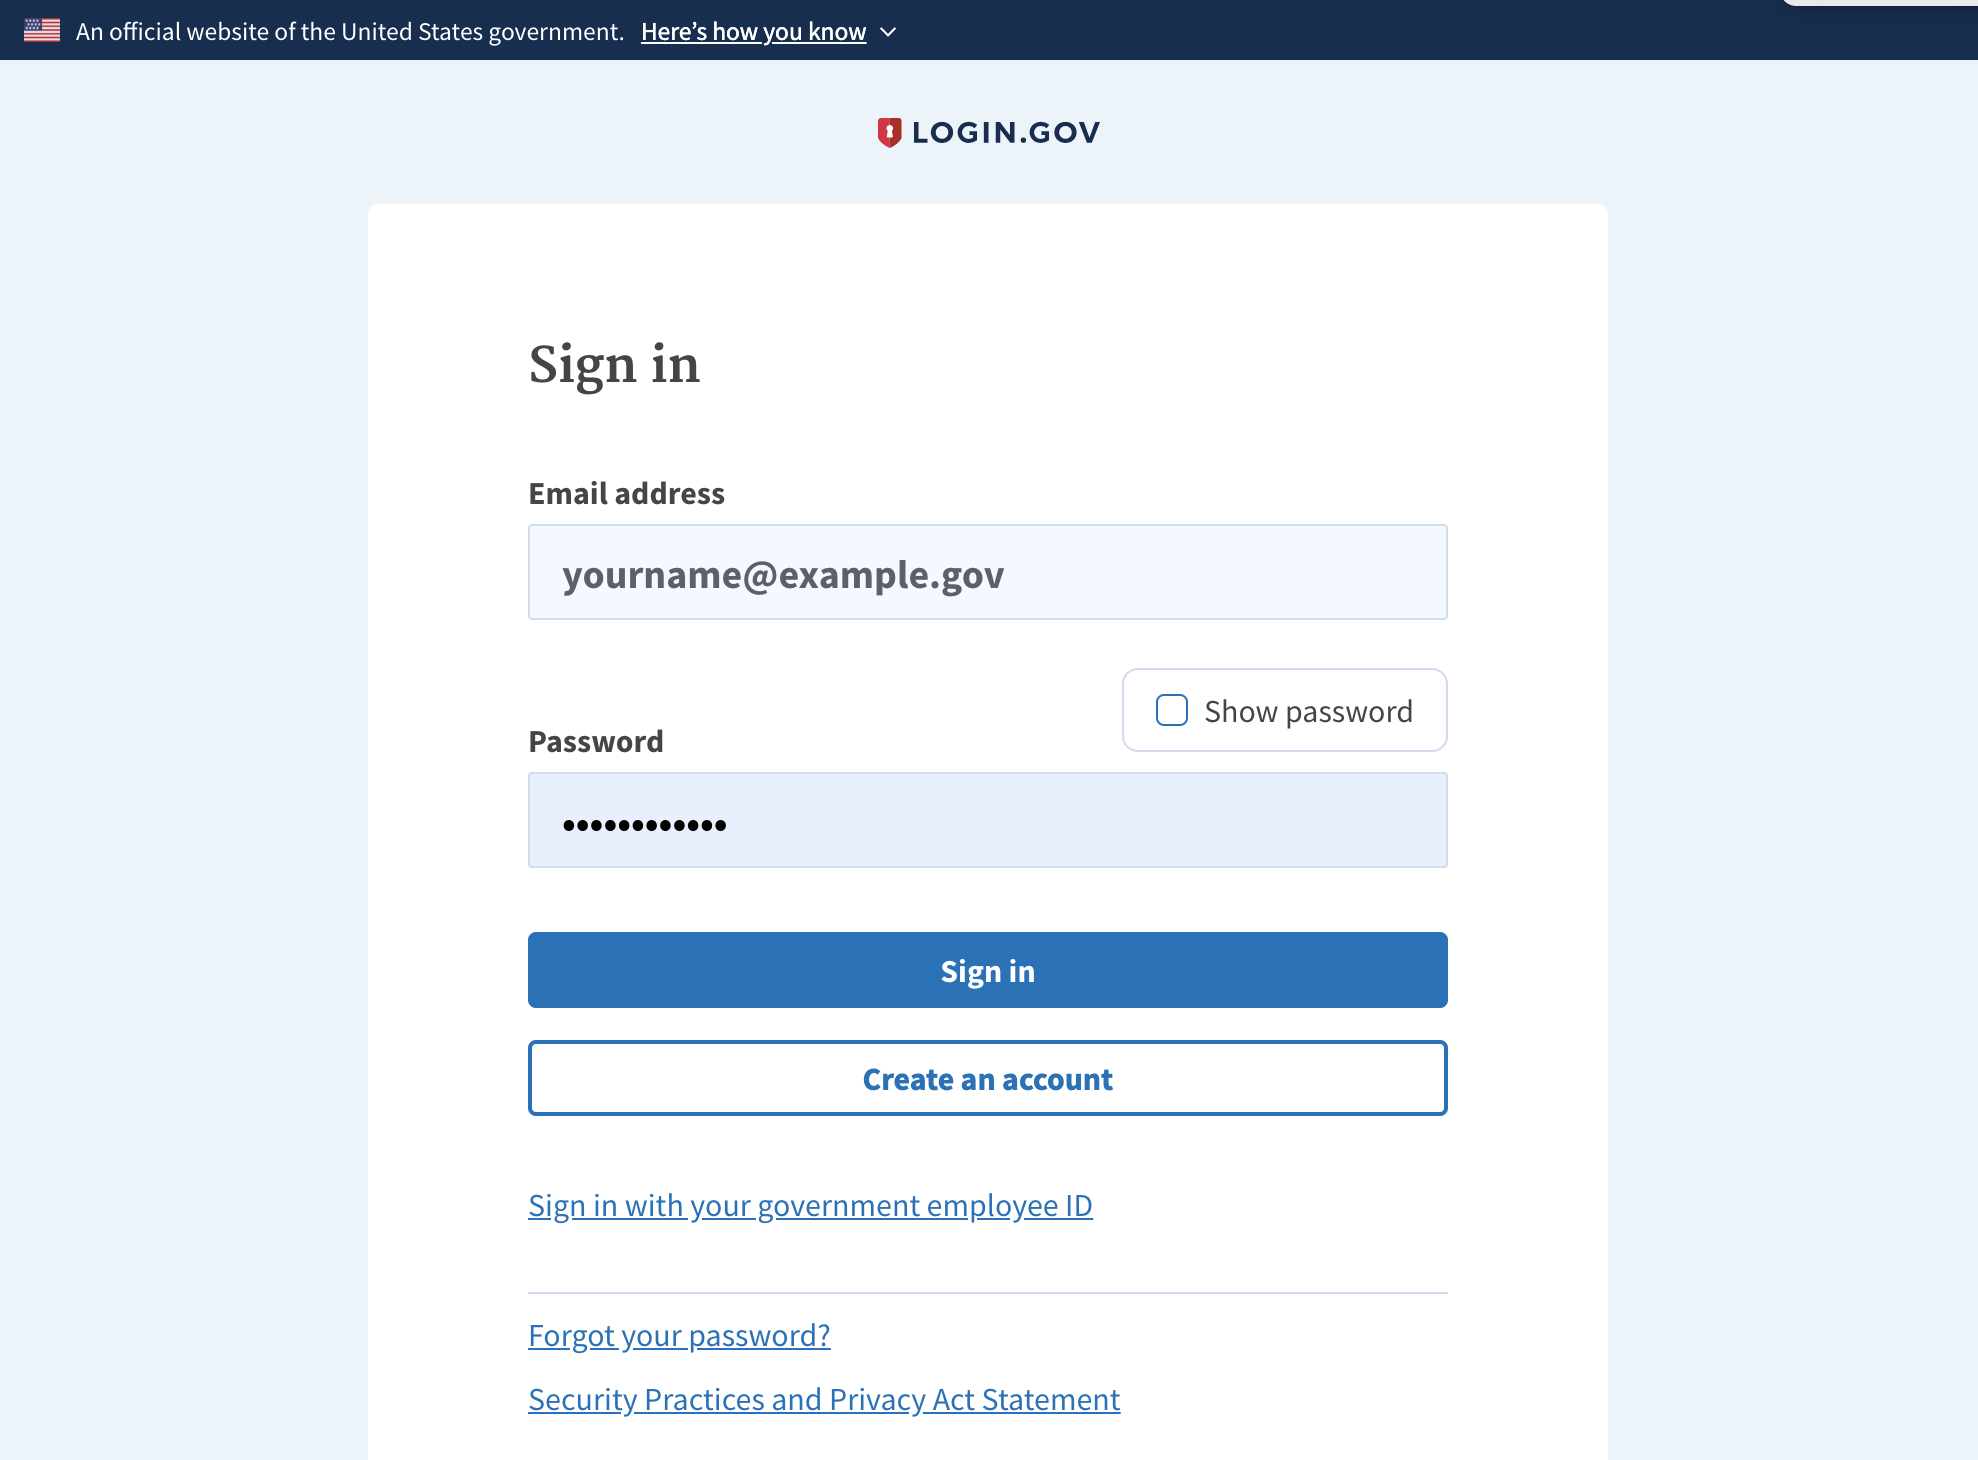 Screenshot showing Login.gov sign in page